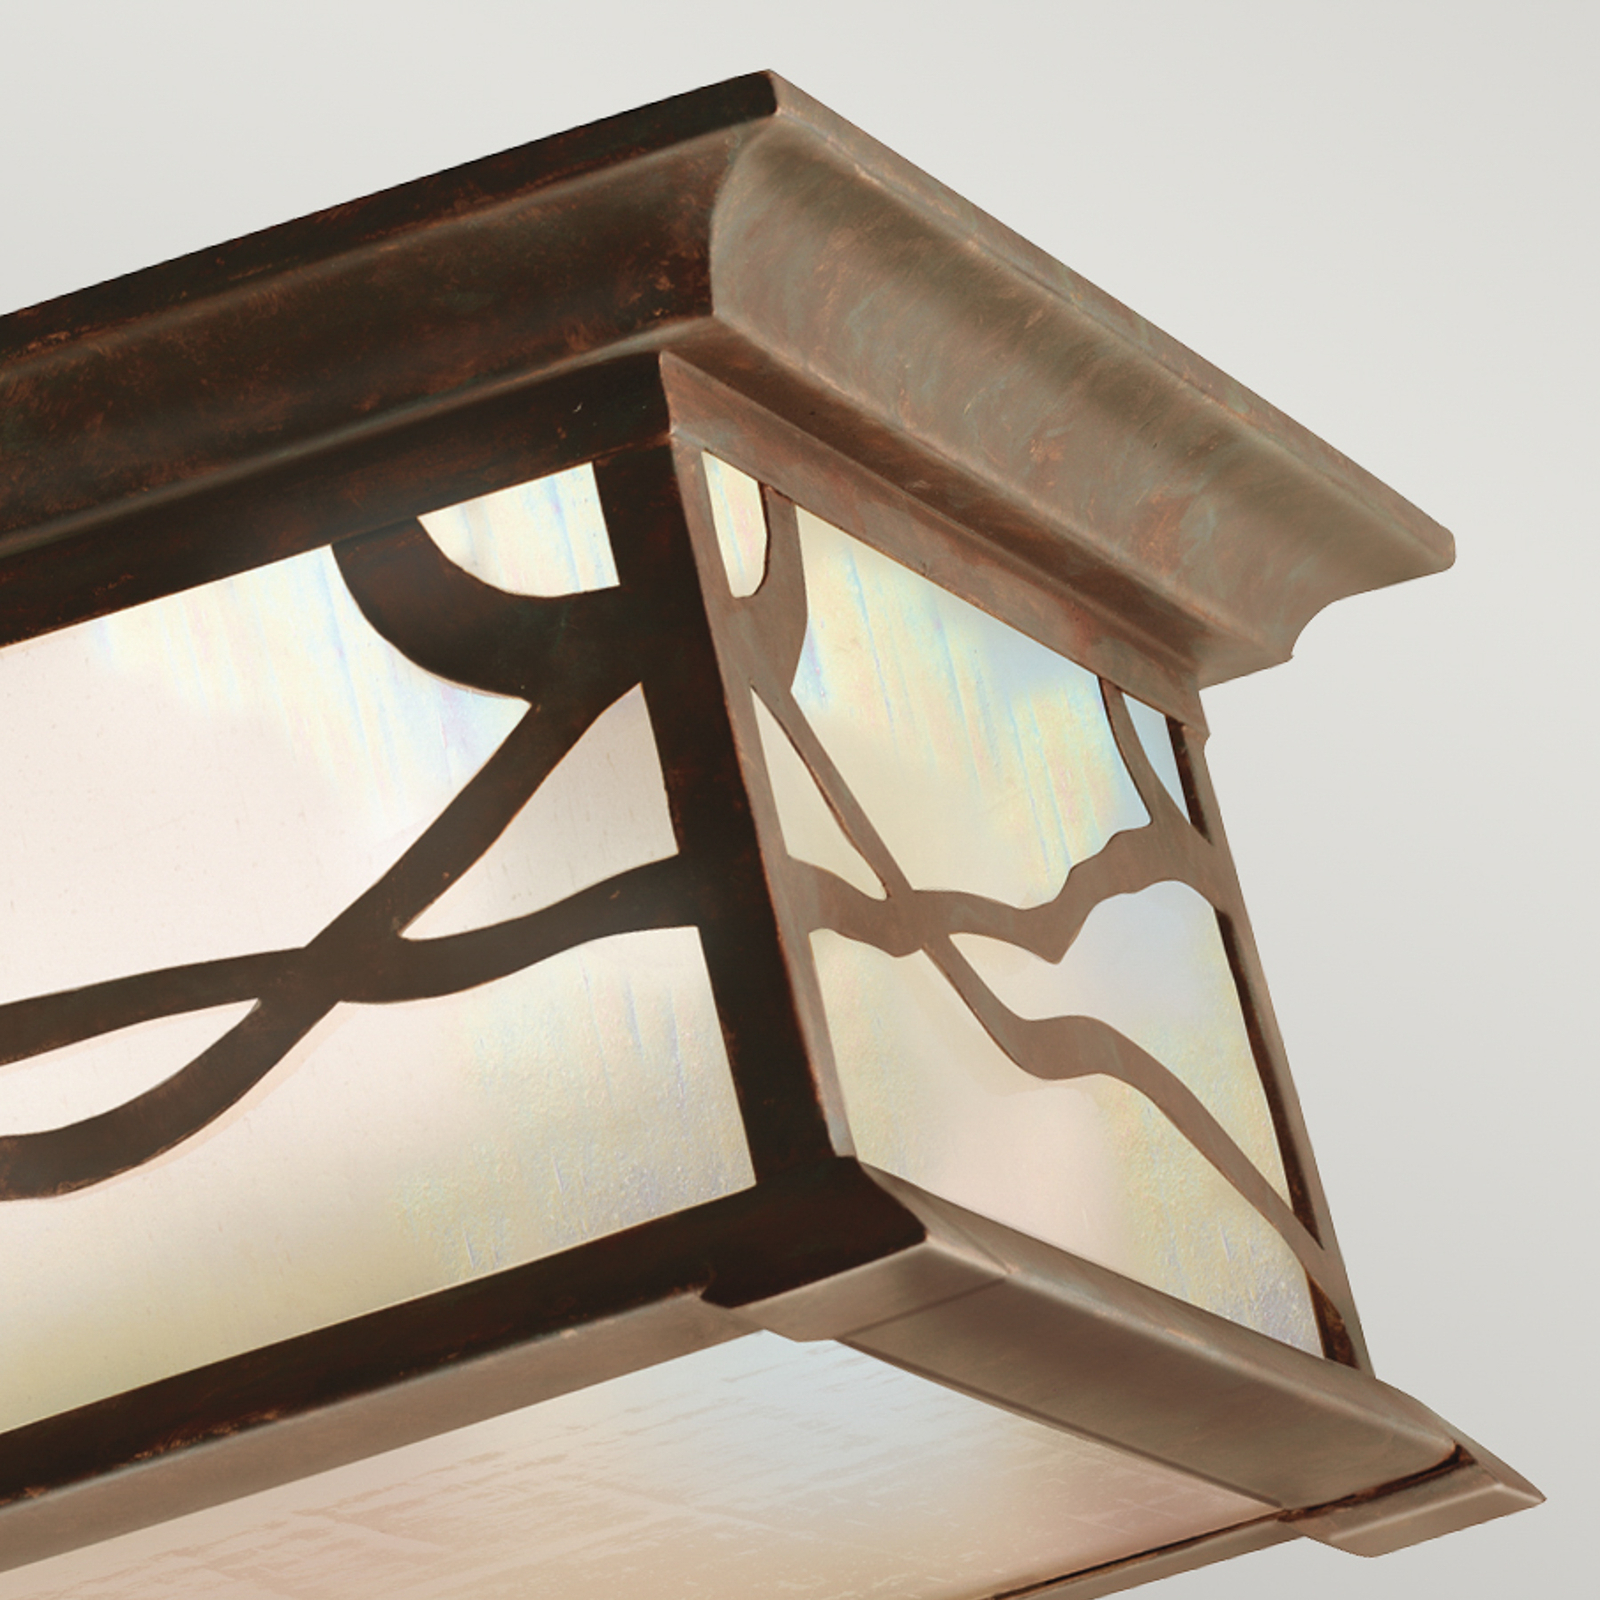 Morris outdoor ceiling light, copper